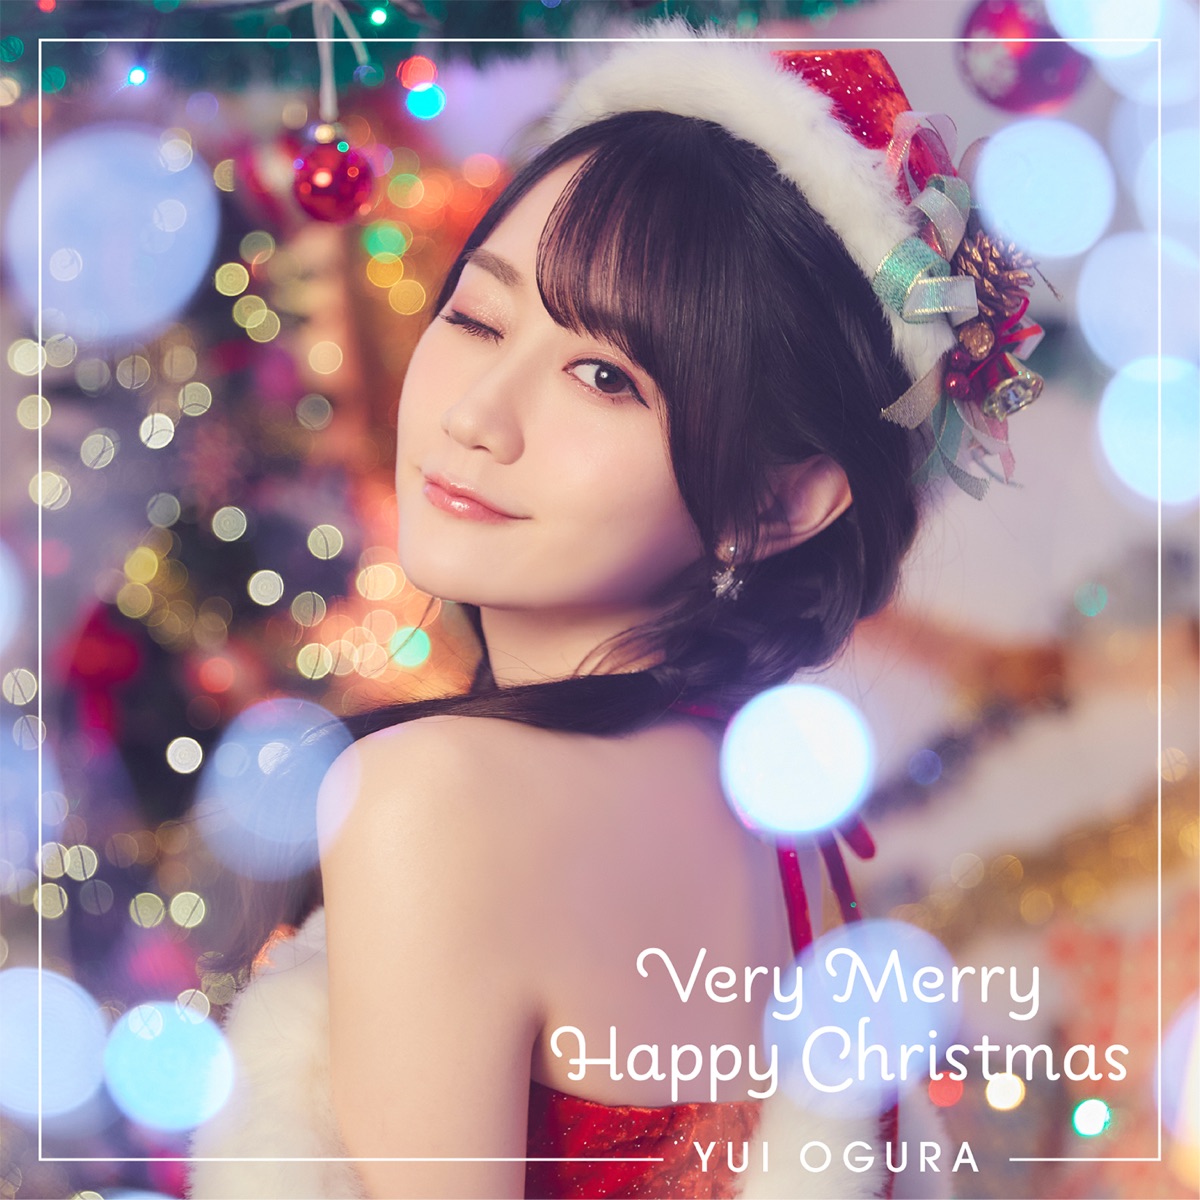 『小倉唯 - Very Merry Happy Christmas』収録の『Very Merry Happy Christmas』ジャケット